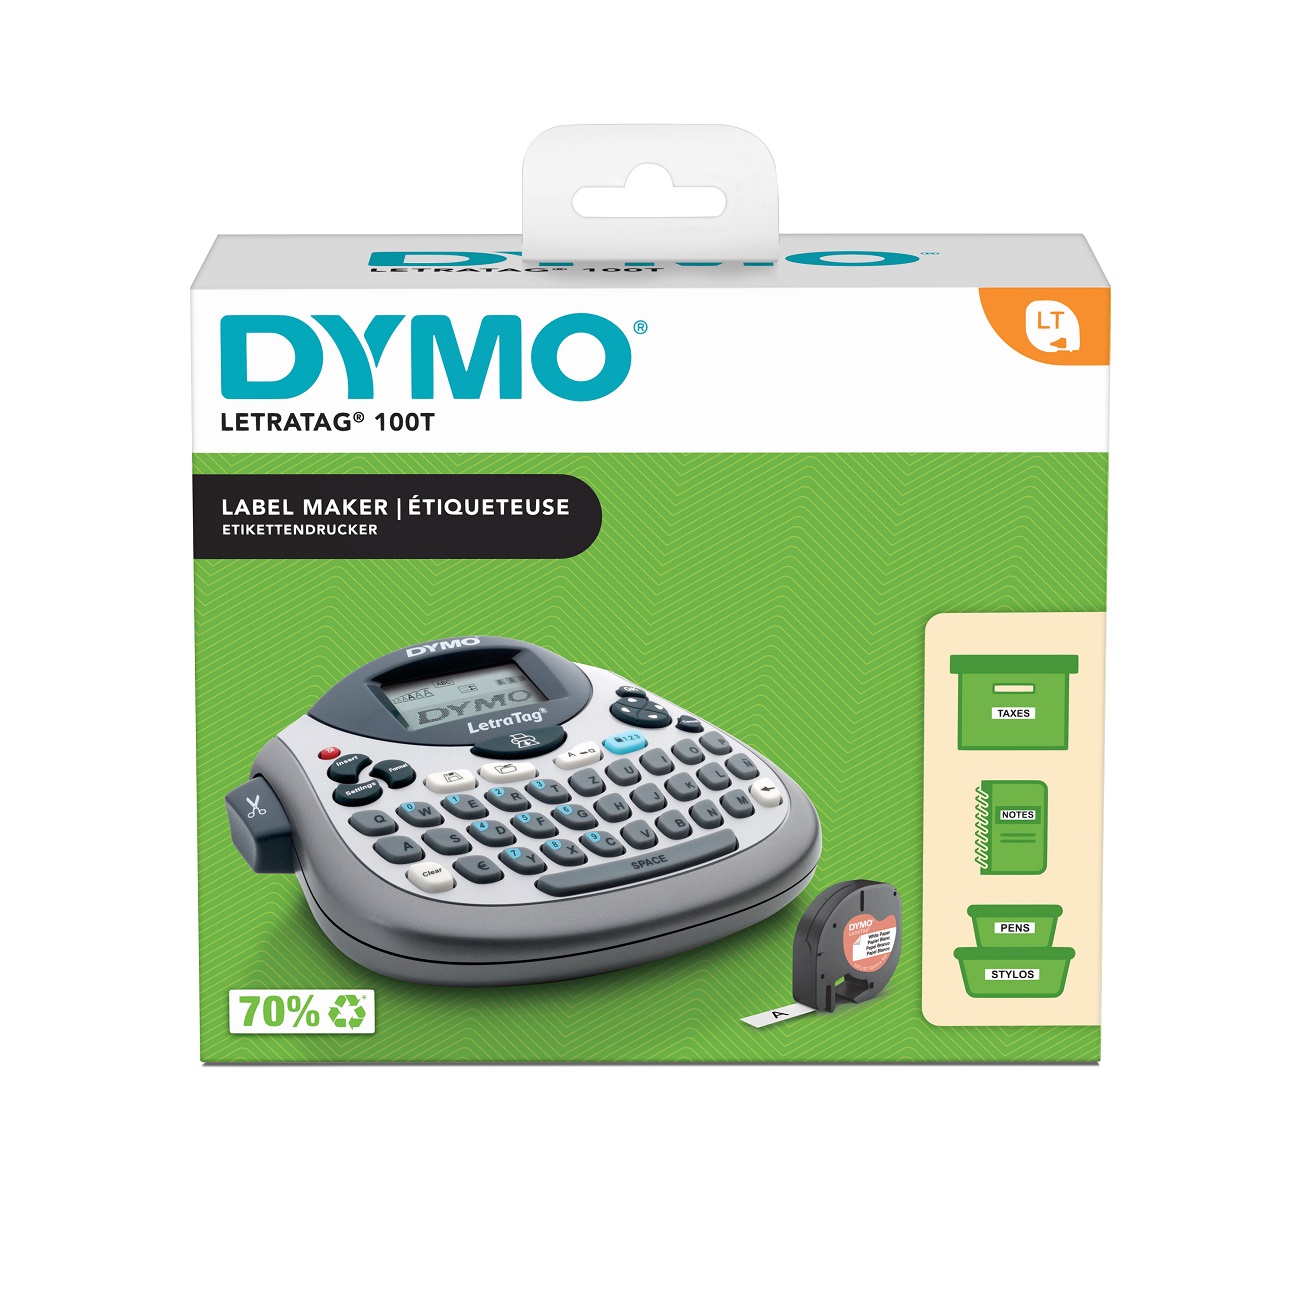 Dymo 2174591, Etikettendrucker, DYMO LetraTag LT-100T 2174591 (BILD1)